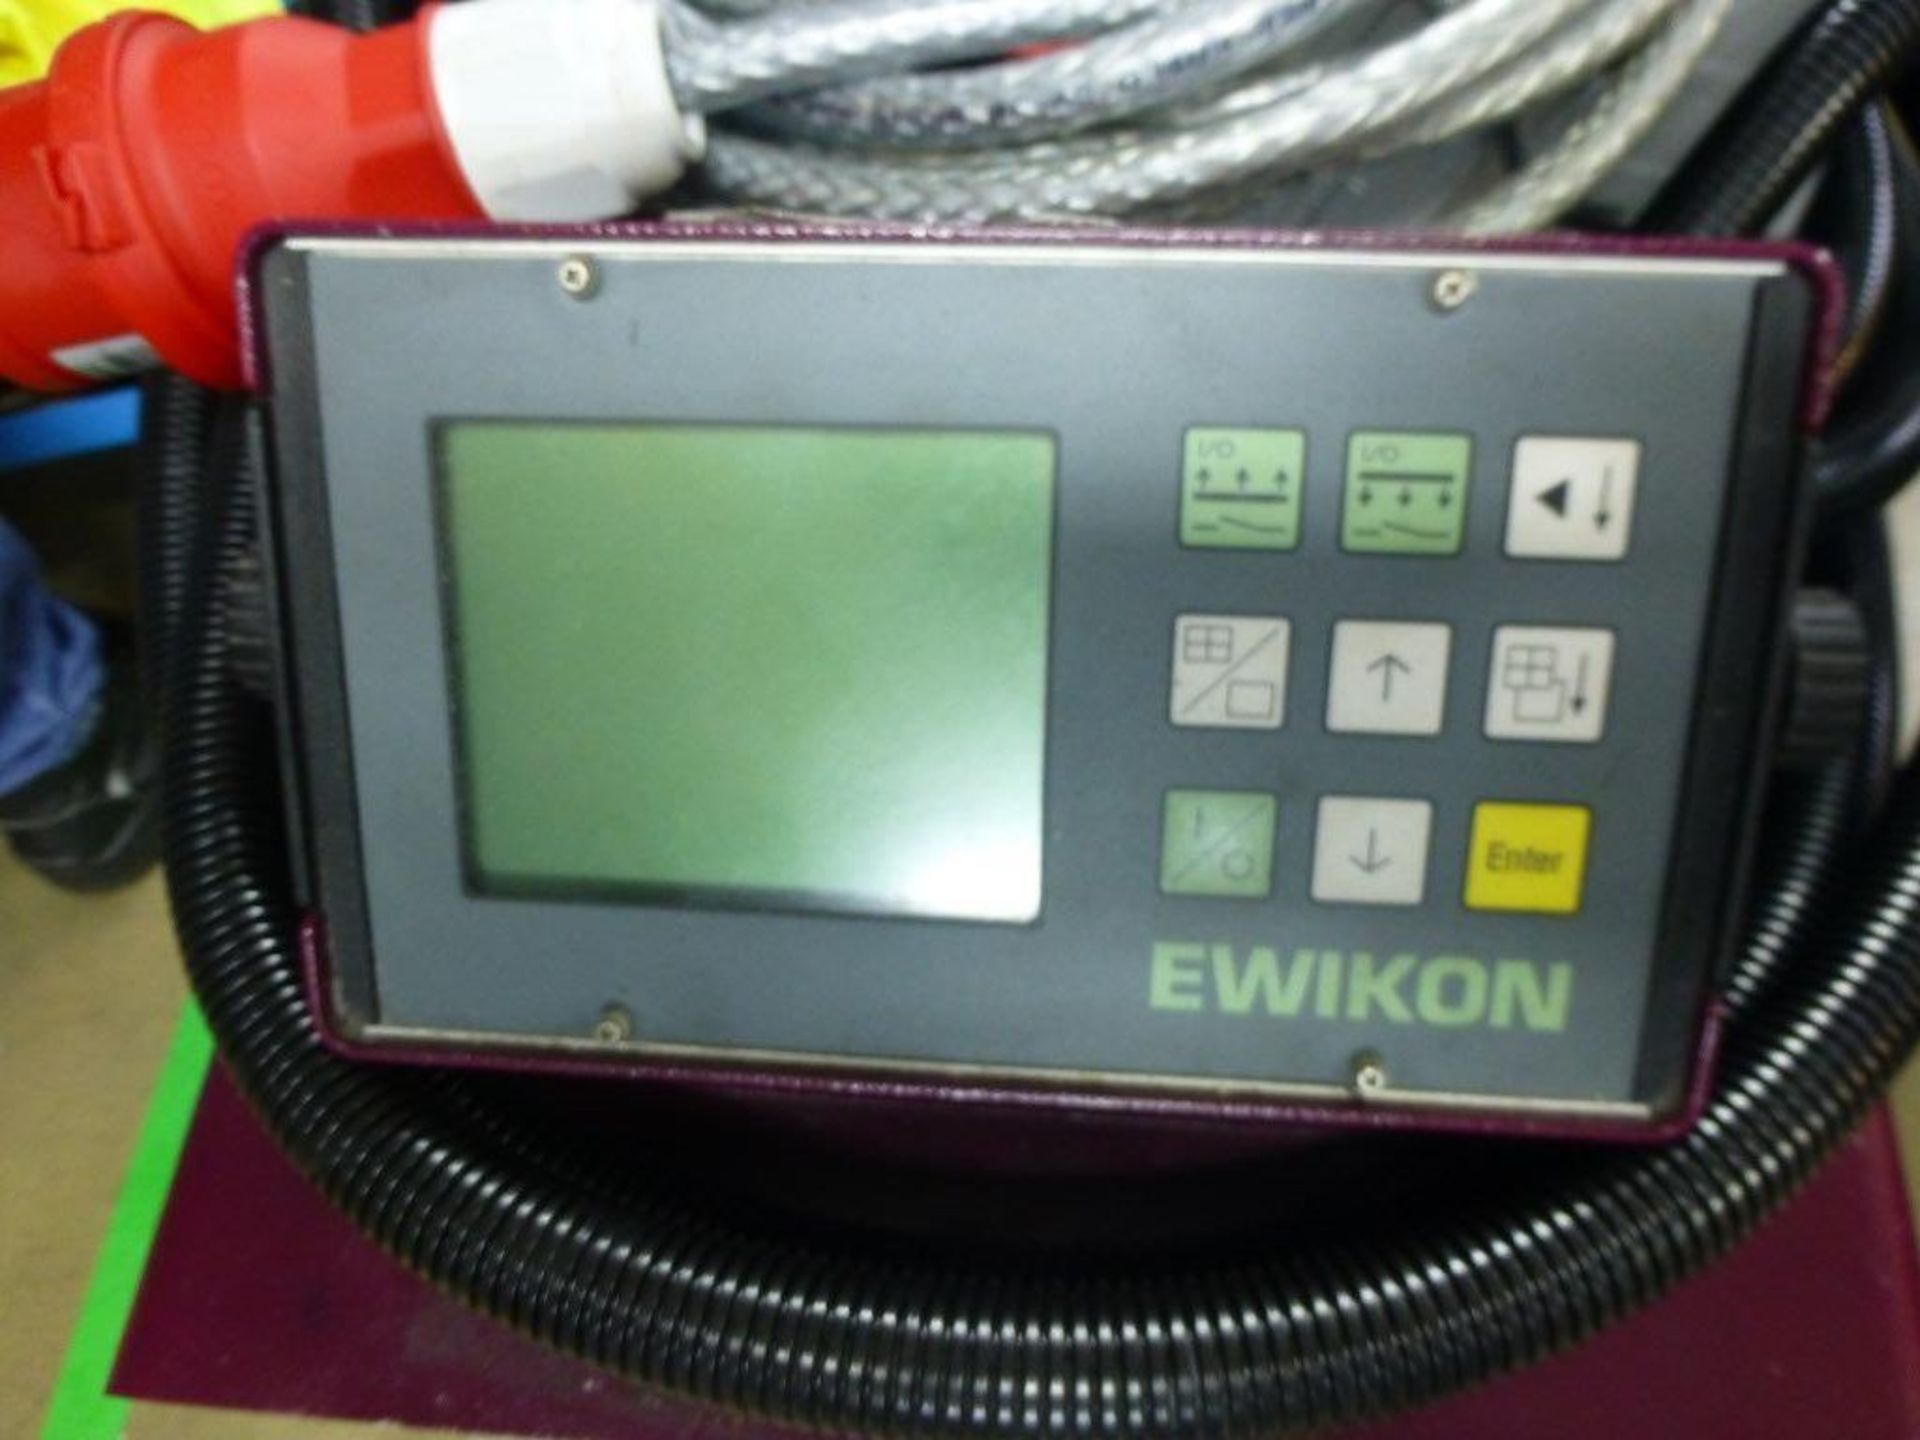 Ewikon 67010.320D temperature controller, Serial No 000015 - Bild 2 aus 3